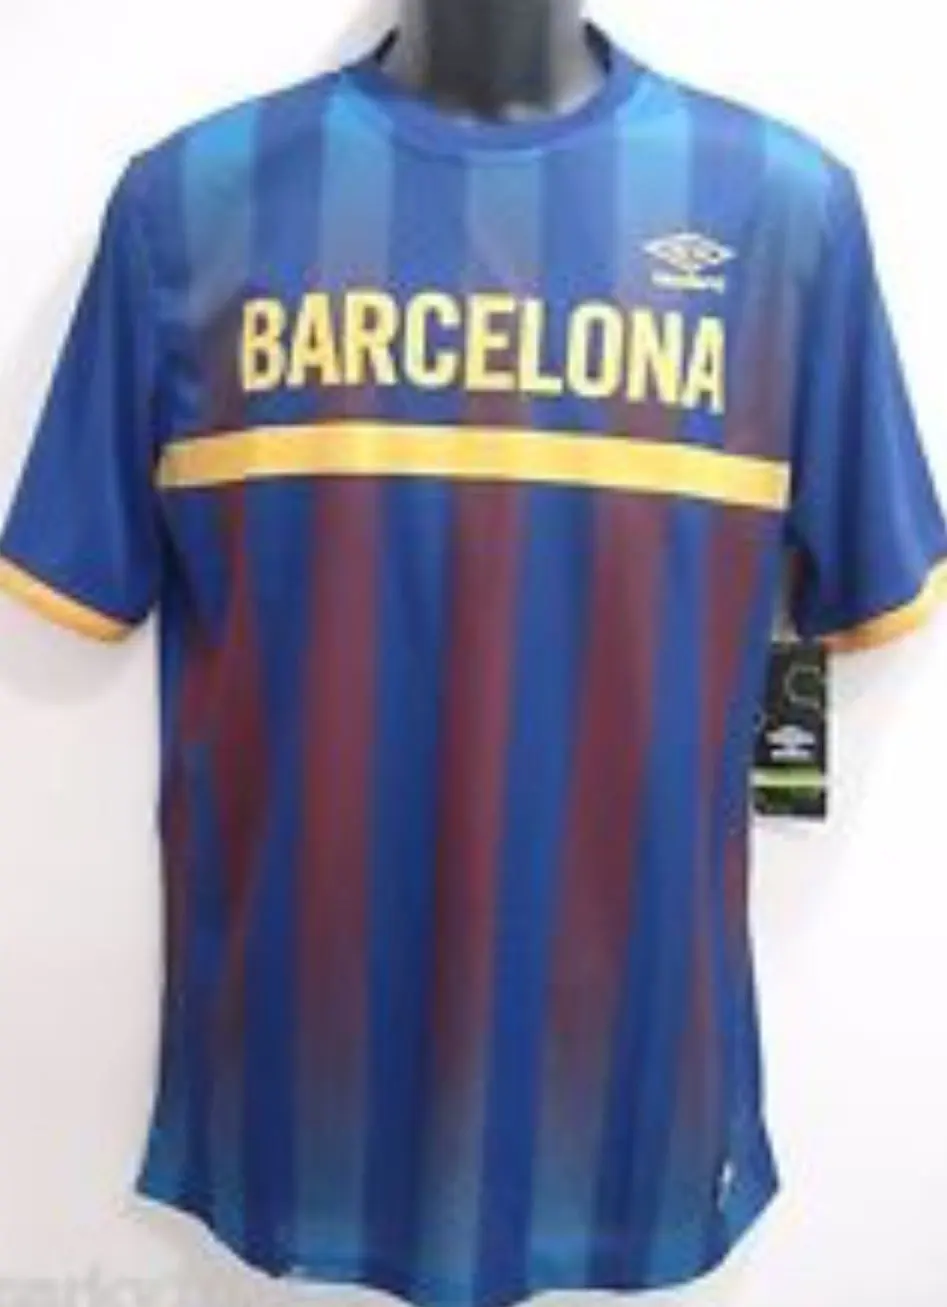 barcelona jersey price